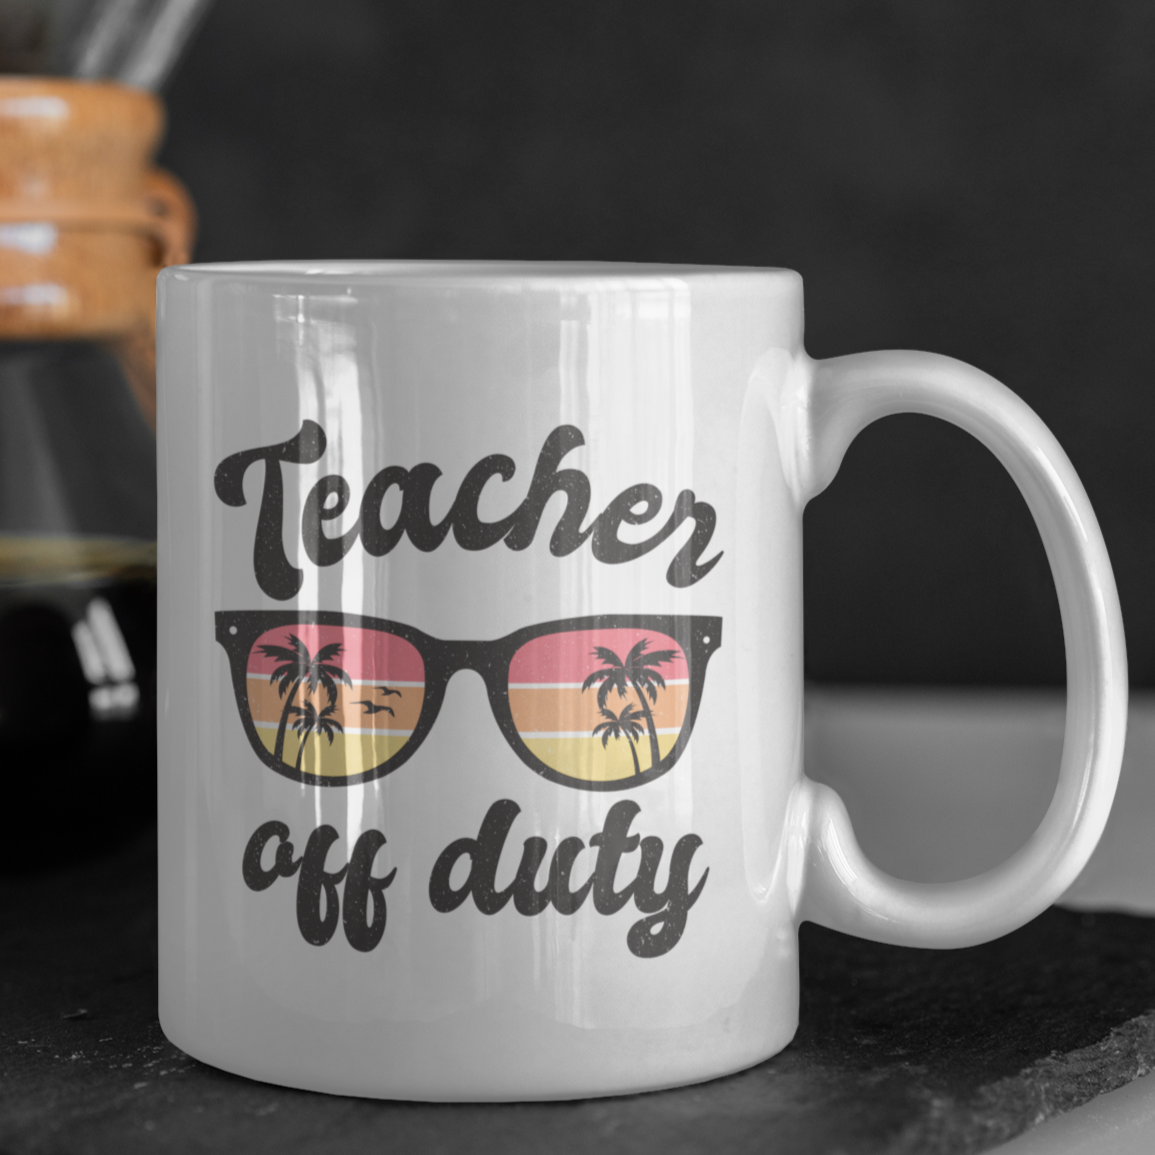 Teacher Off Duty Mug